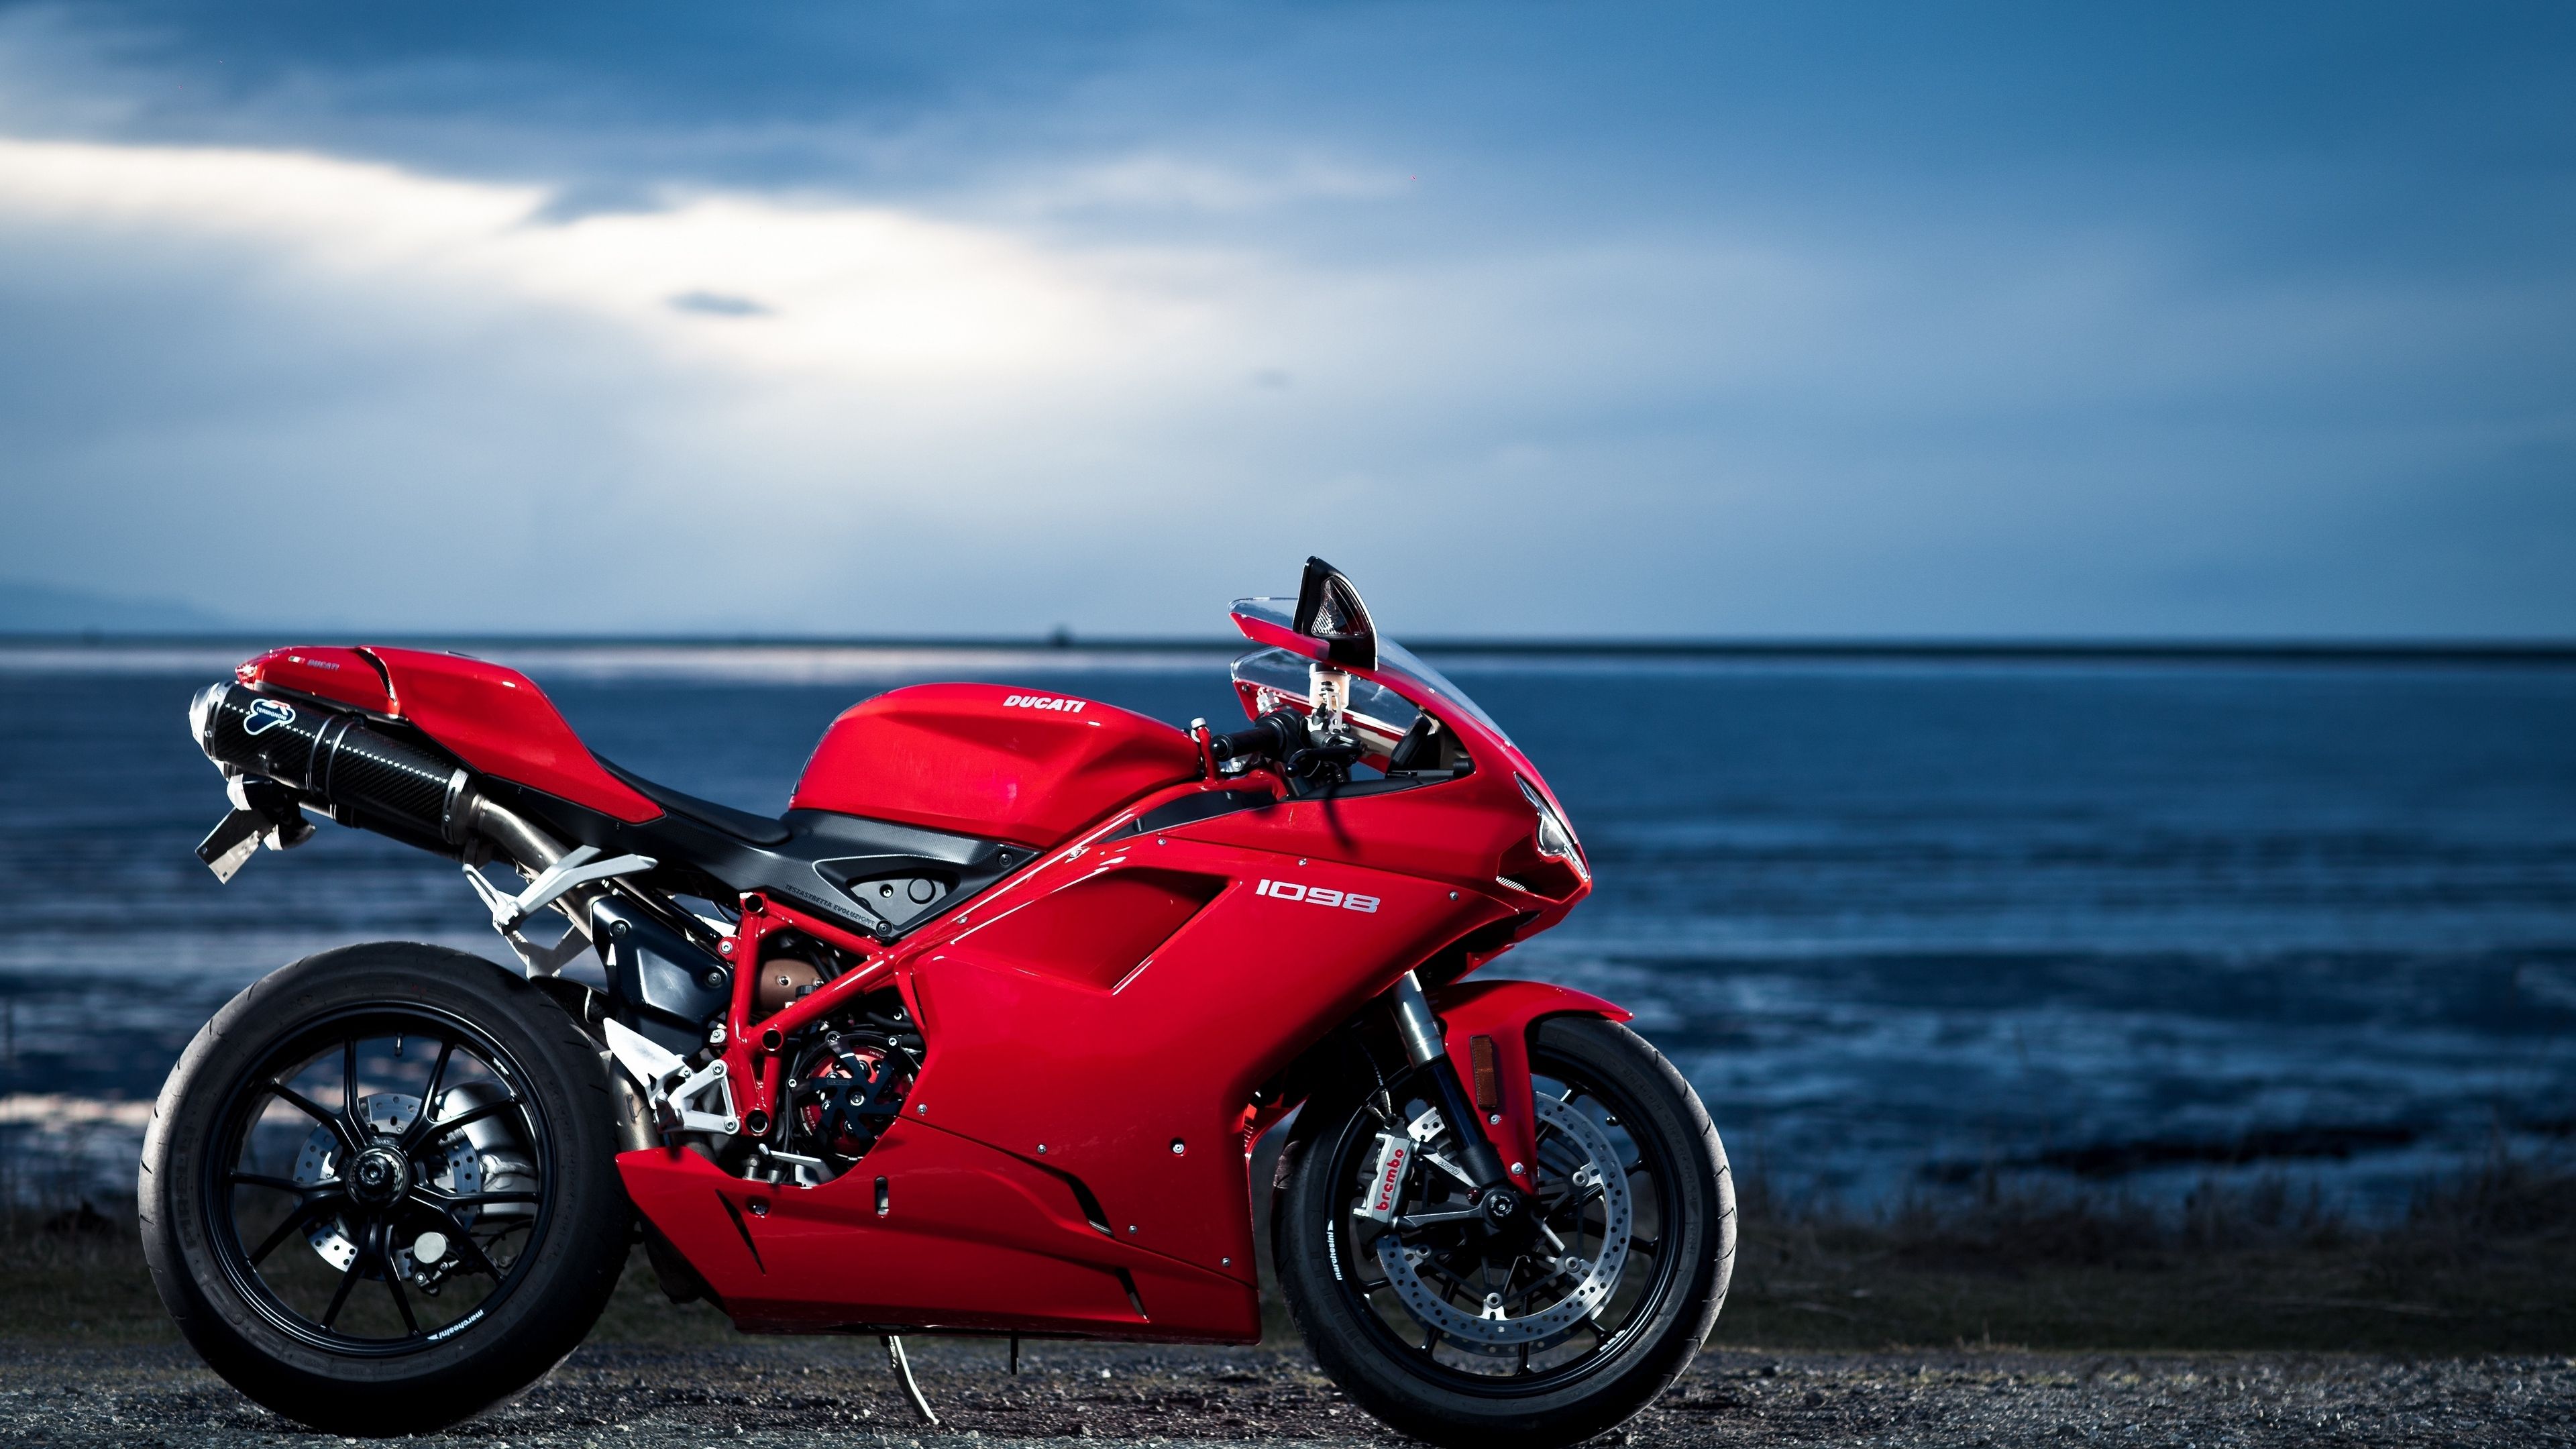 Ducati motorcycle s on